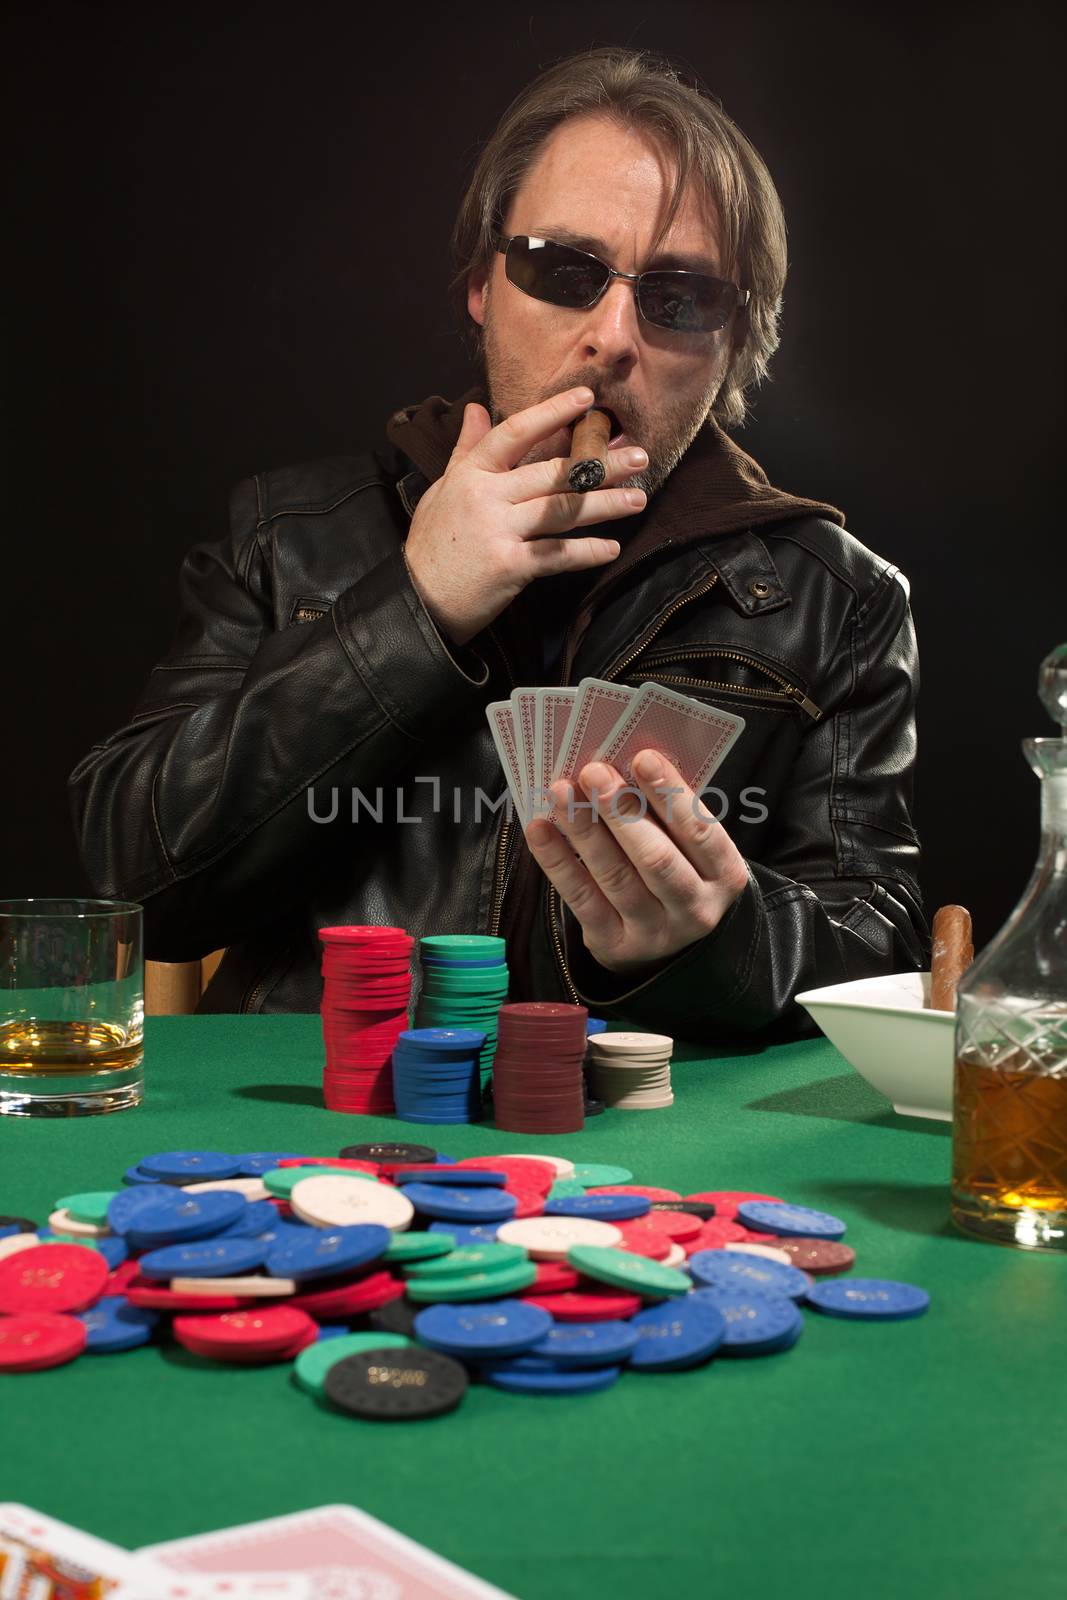 Smoking poker player wearing sunglasses by sumners